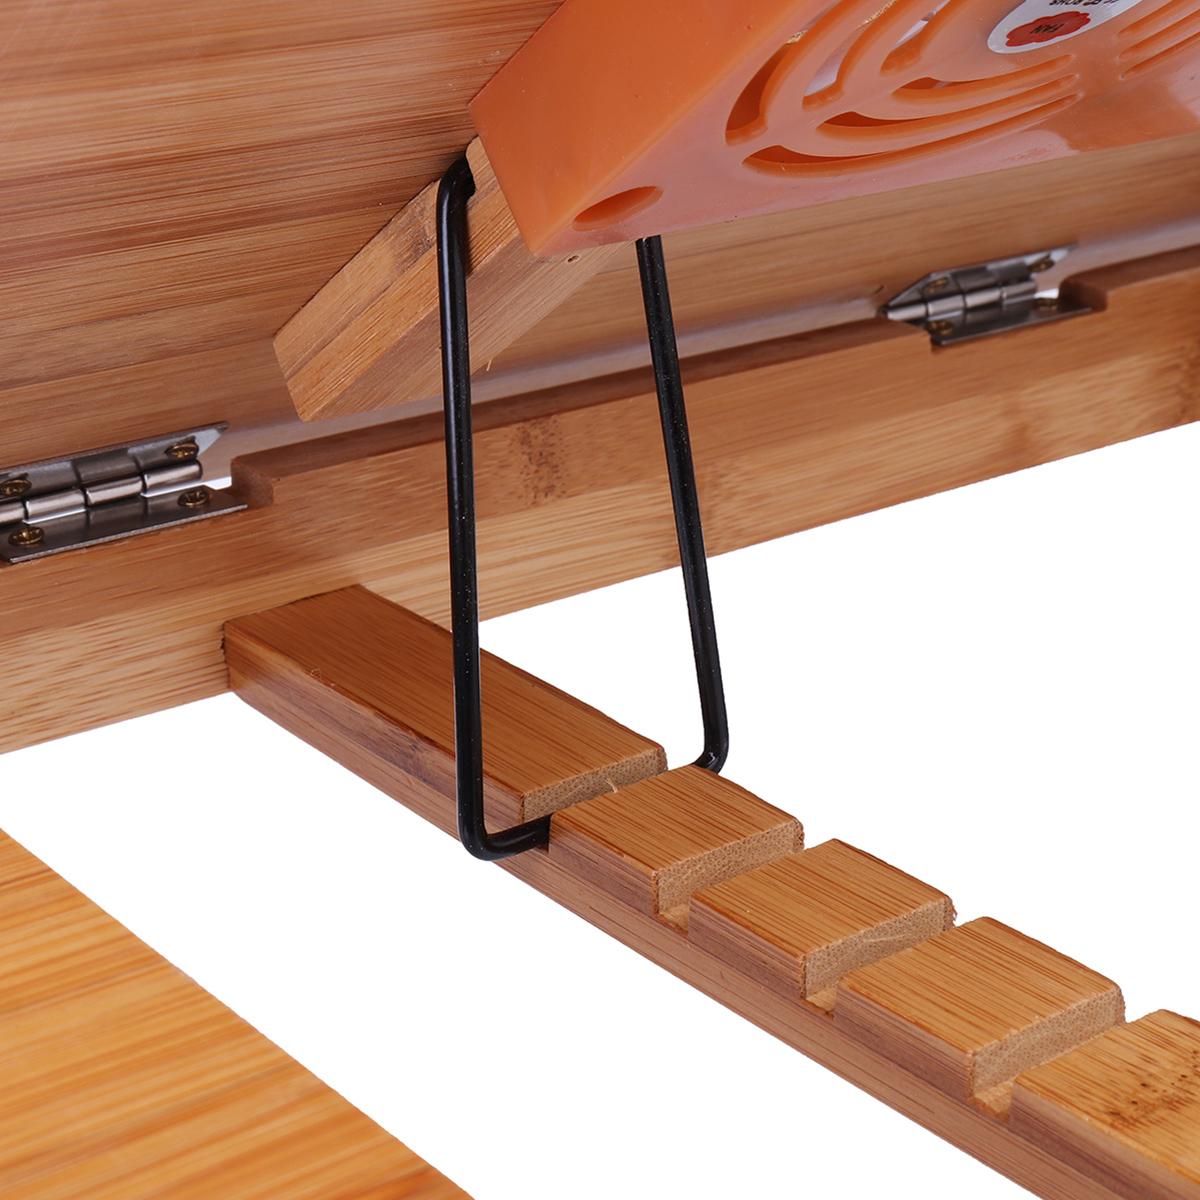 Portable Folding Lap Desk Bamboo Laptop Breakfast Tray Bed Table Stand Fan 15